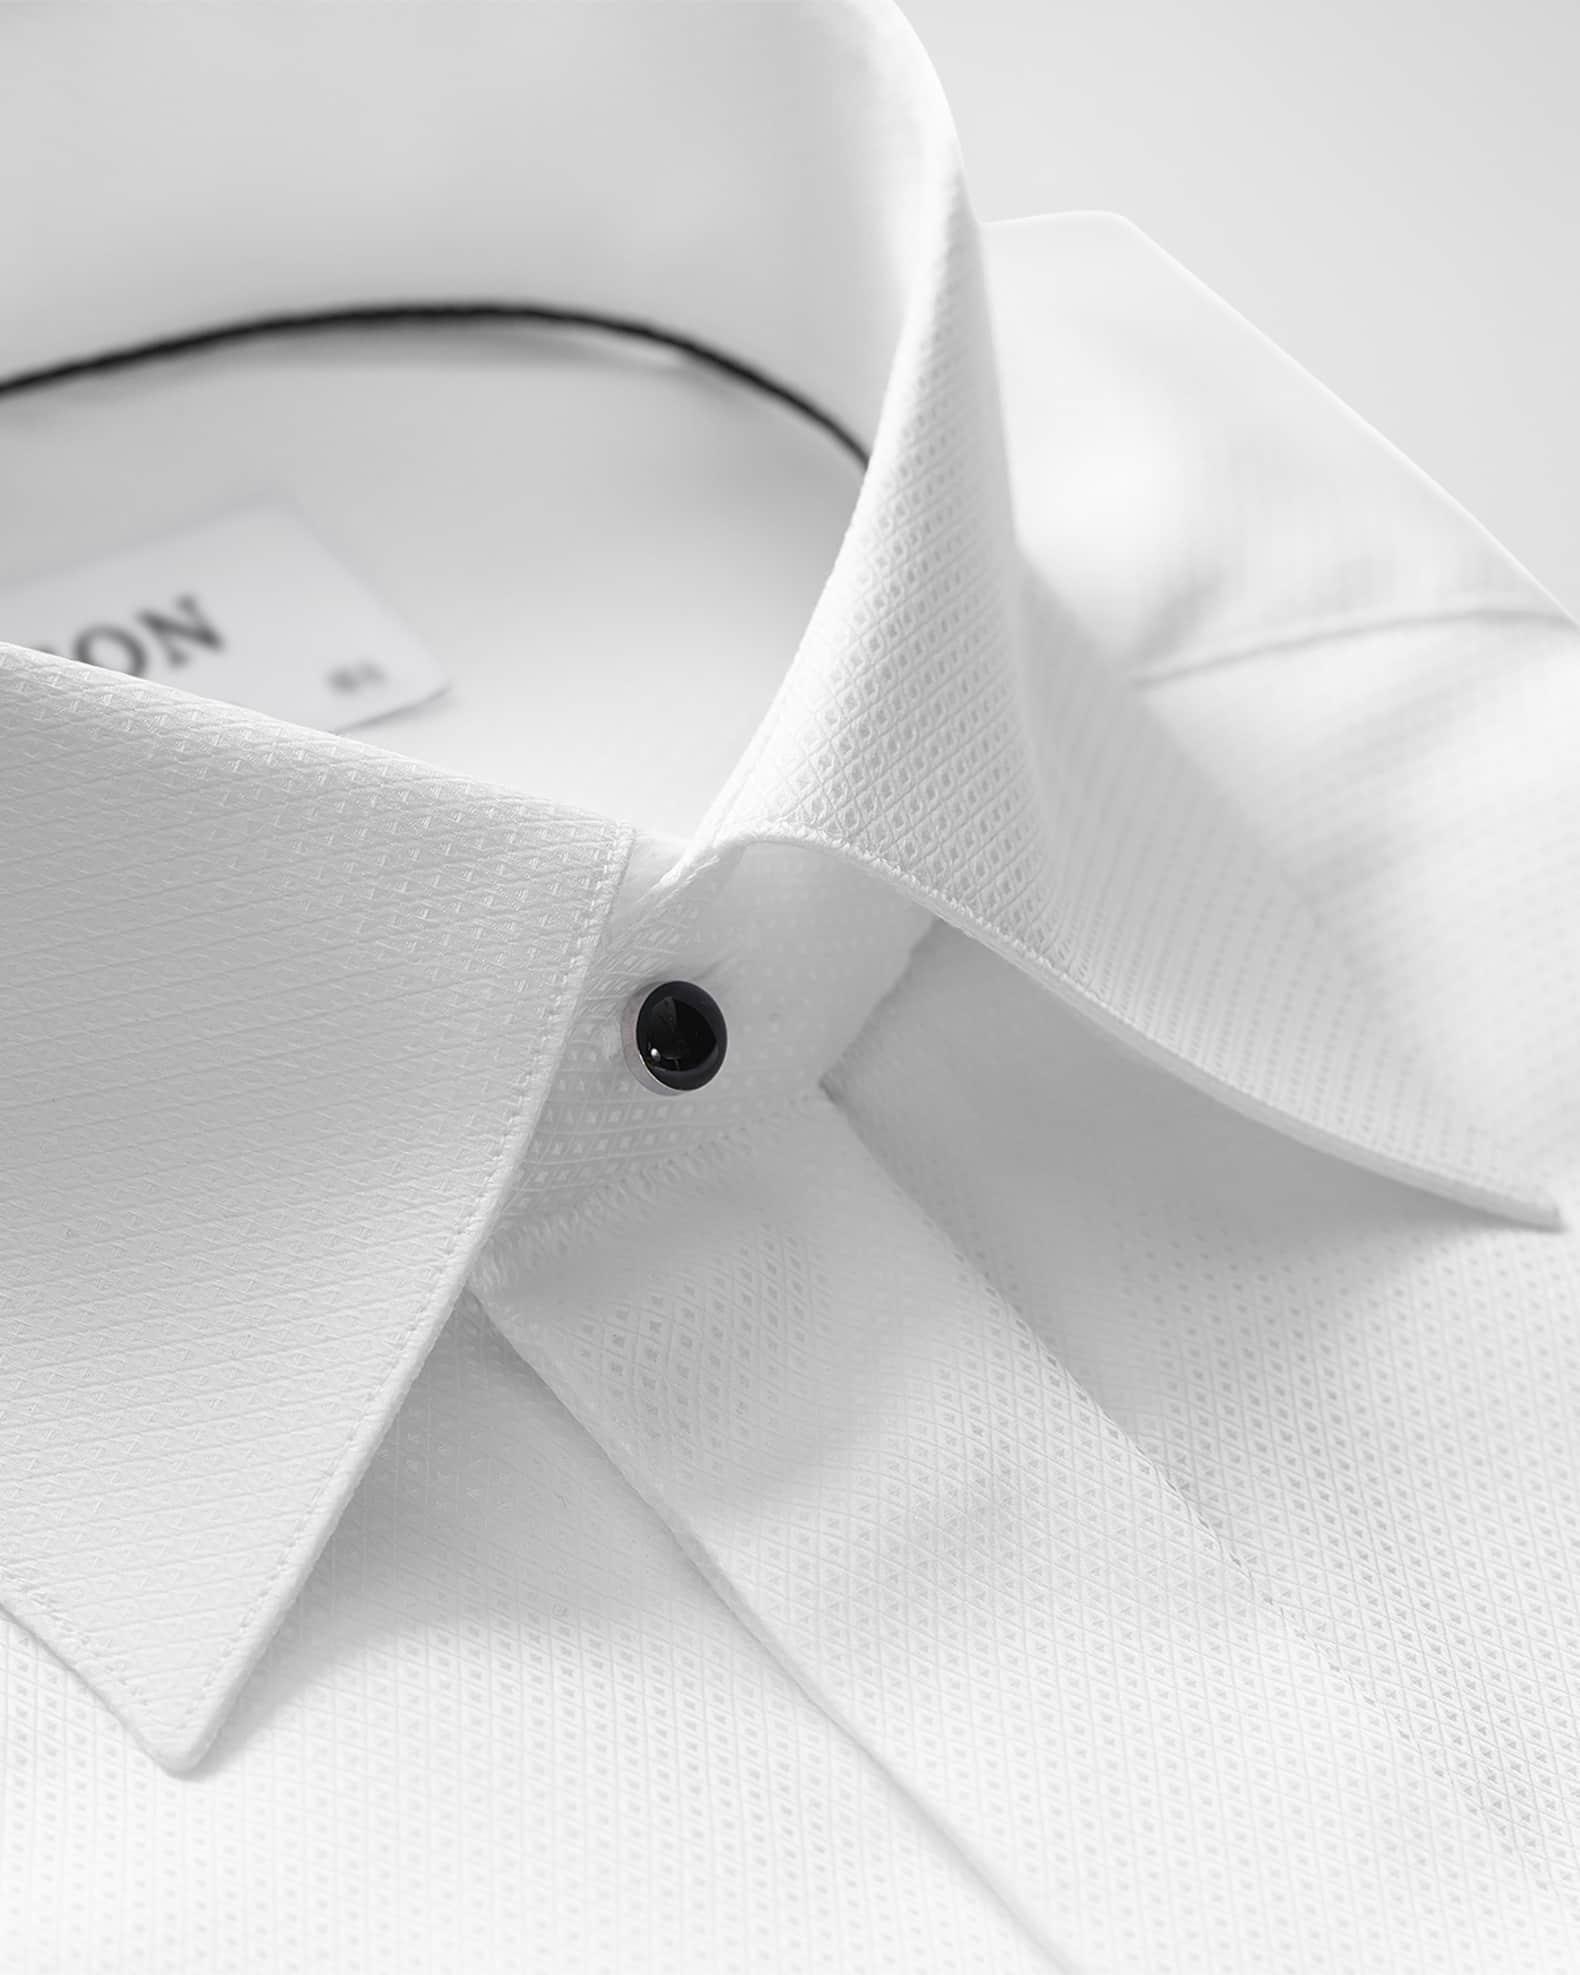 Eton Men's Slim Fit Diamond Weave Formal Shirt | Neiman Marcus